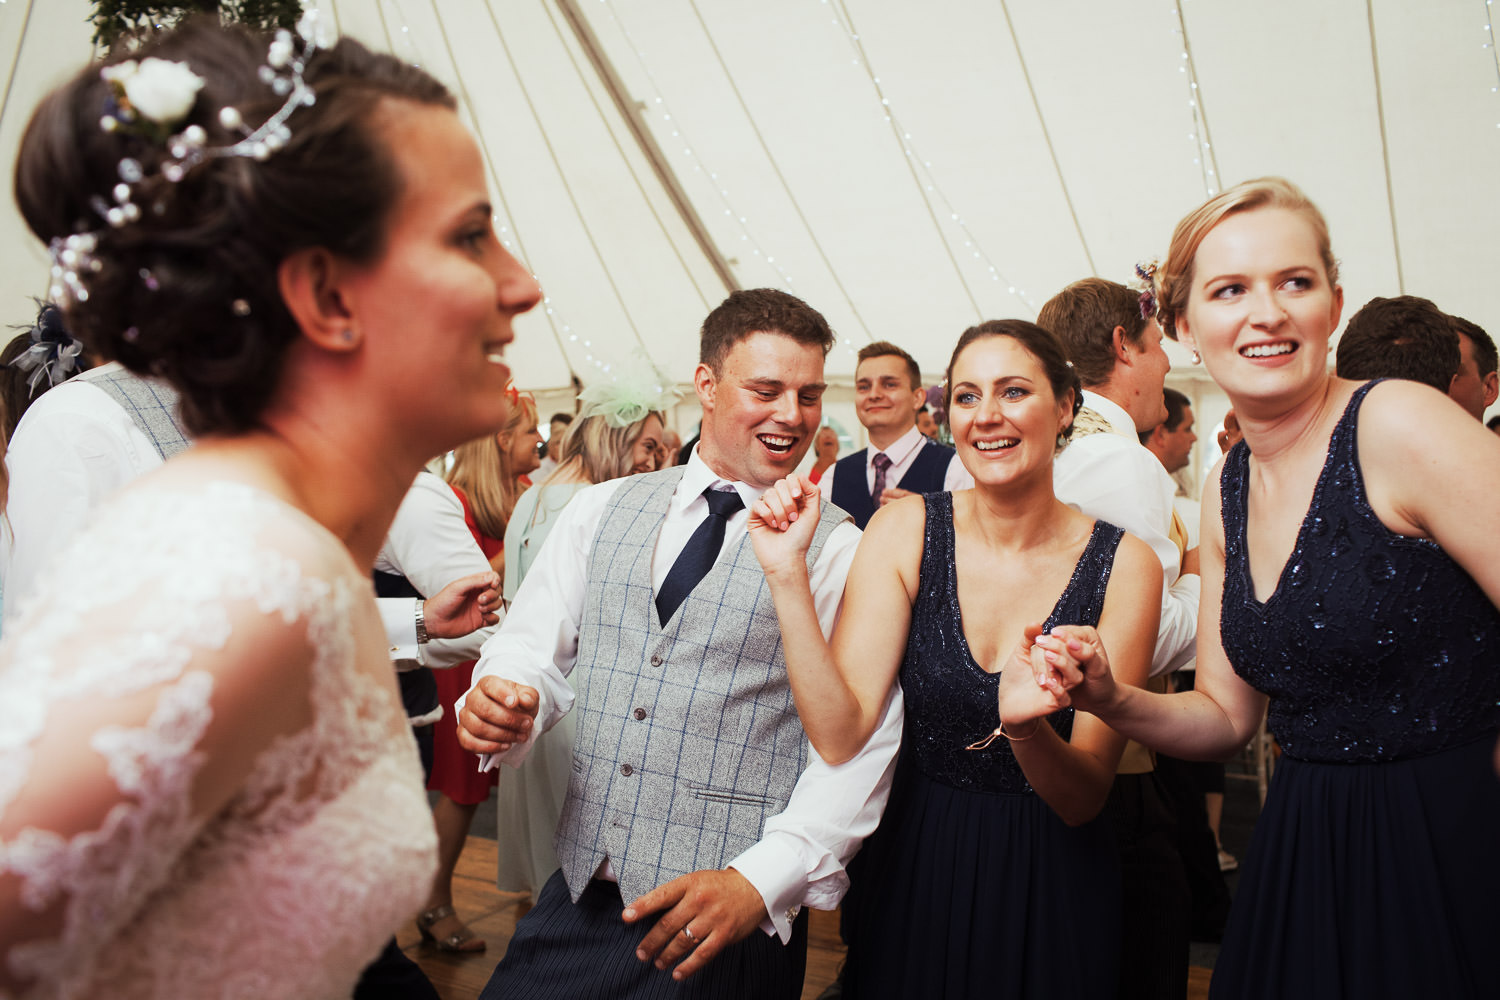 People dancing to a wedding band.